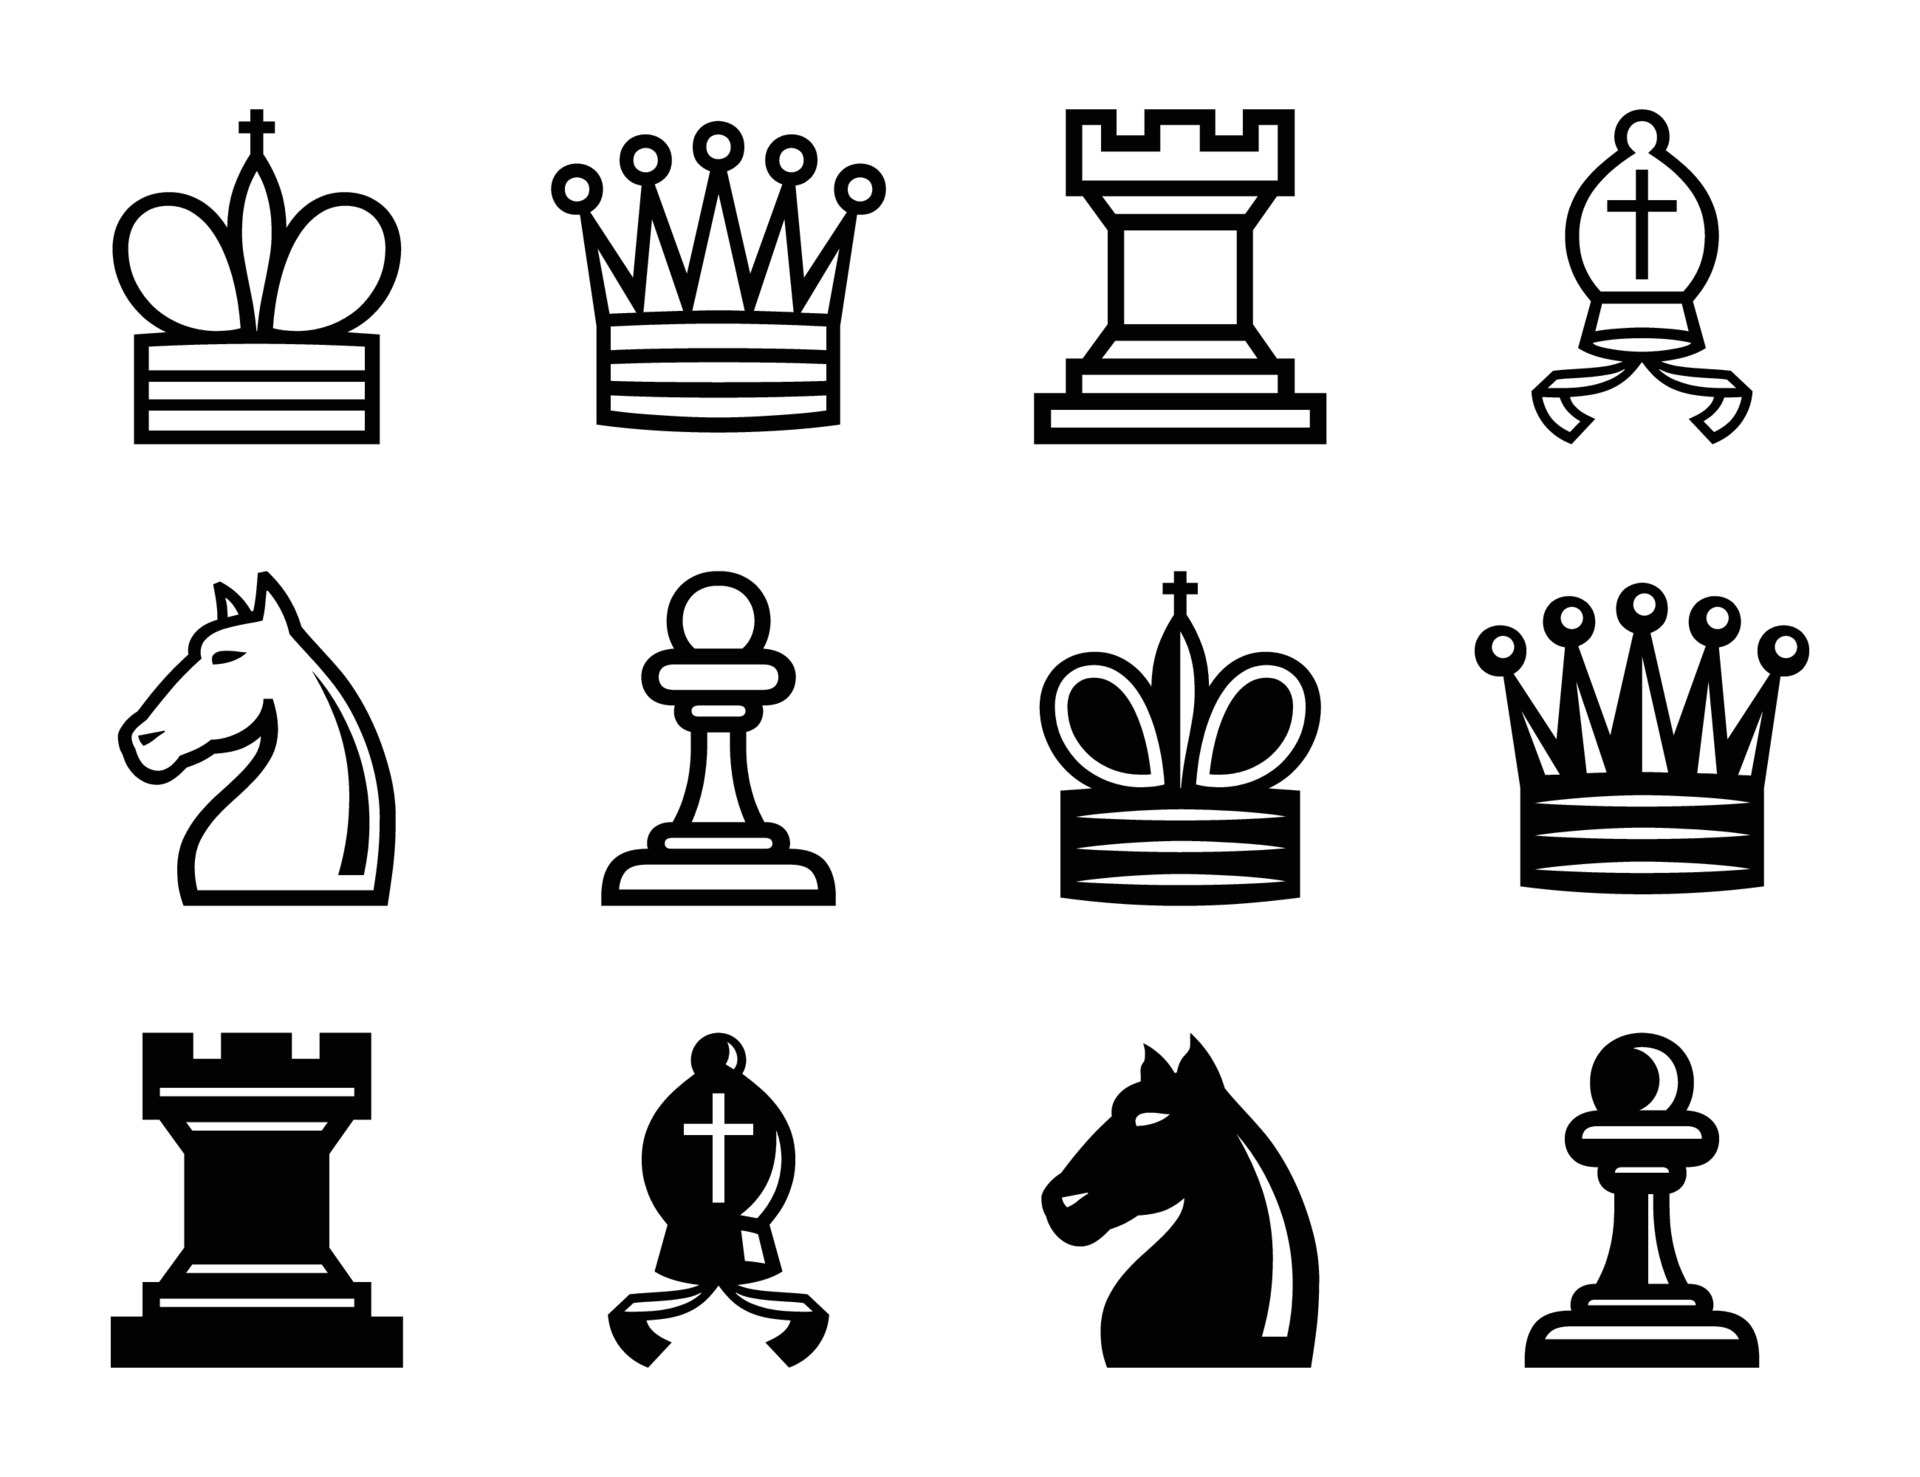 bispo xadrez logotipo Projeto vetor ilustração 24322908 Vetor no Vecteezy